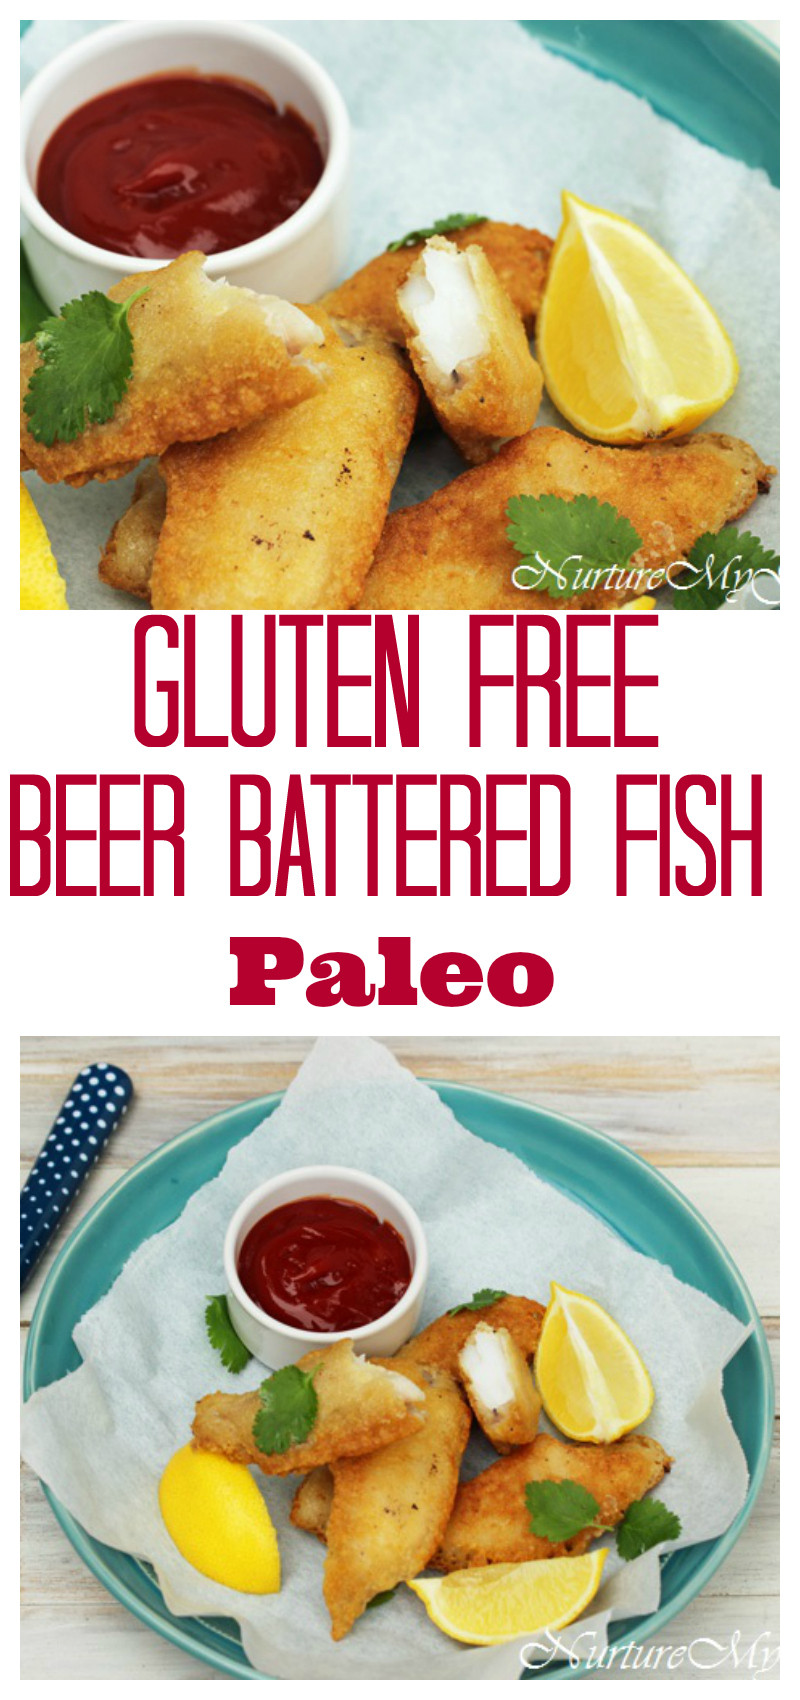 Gluten Free Beer Recipes
 gluten free beer battered fish